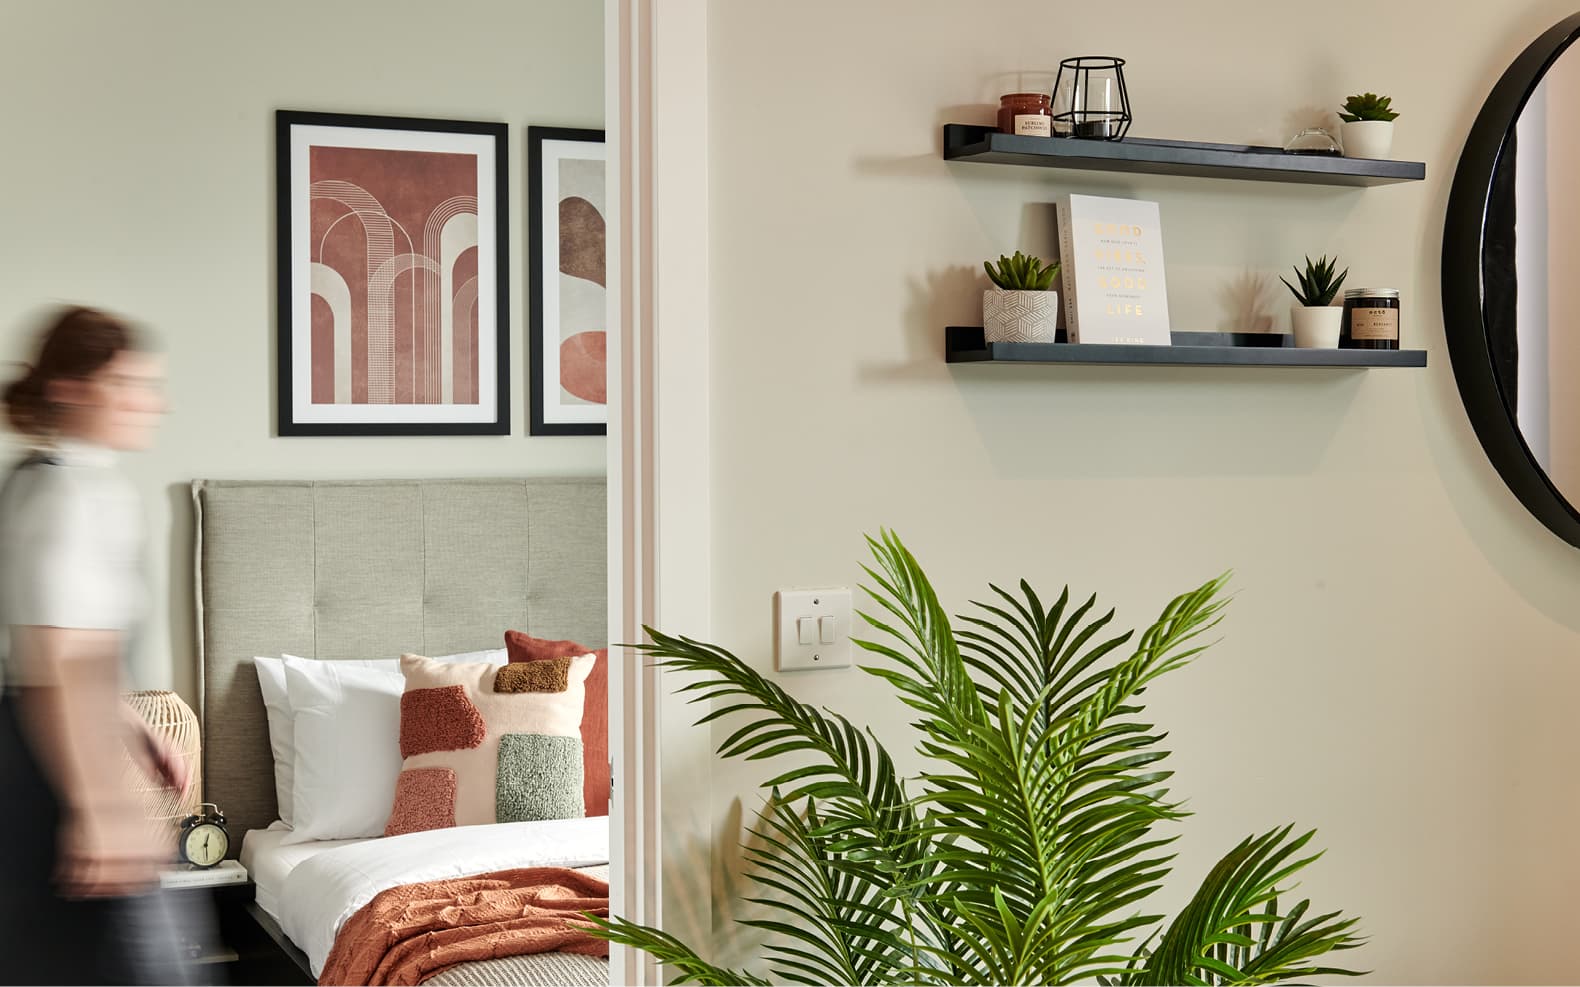 lounge shelves, pot plant, view into bedroom